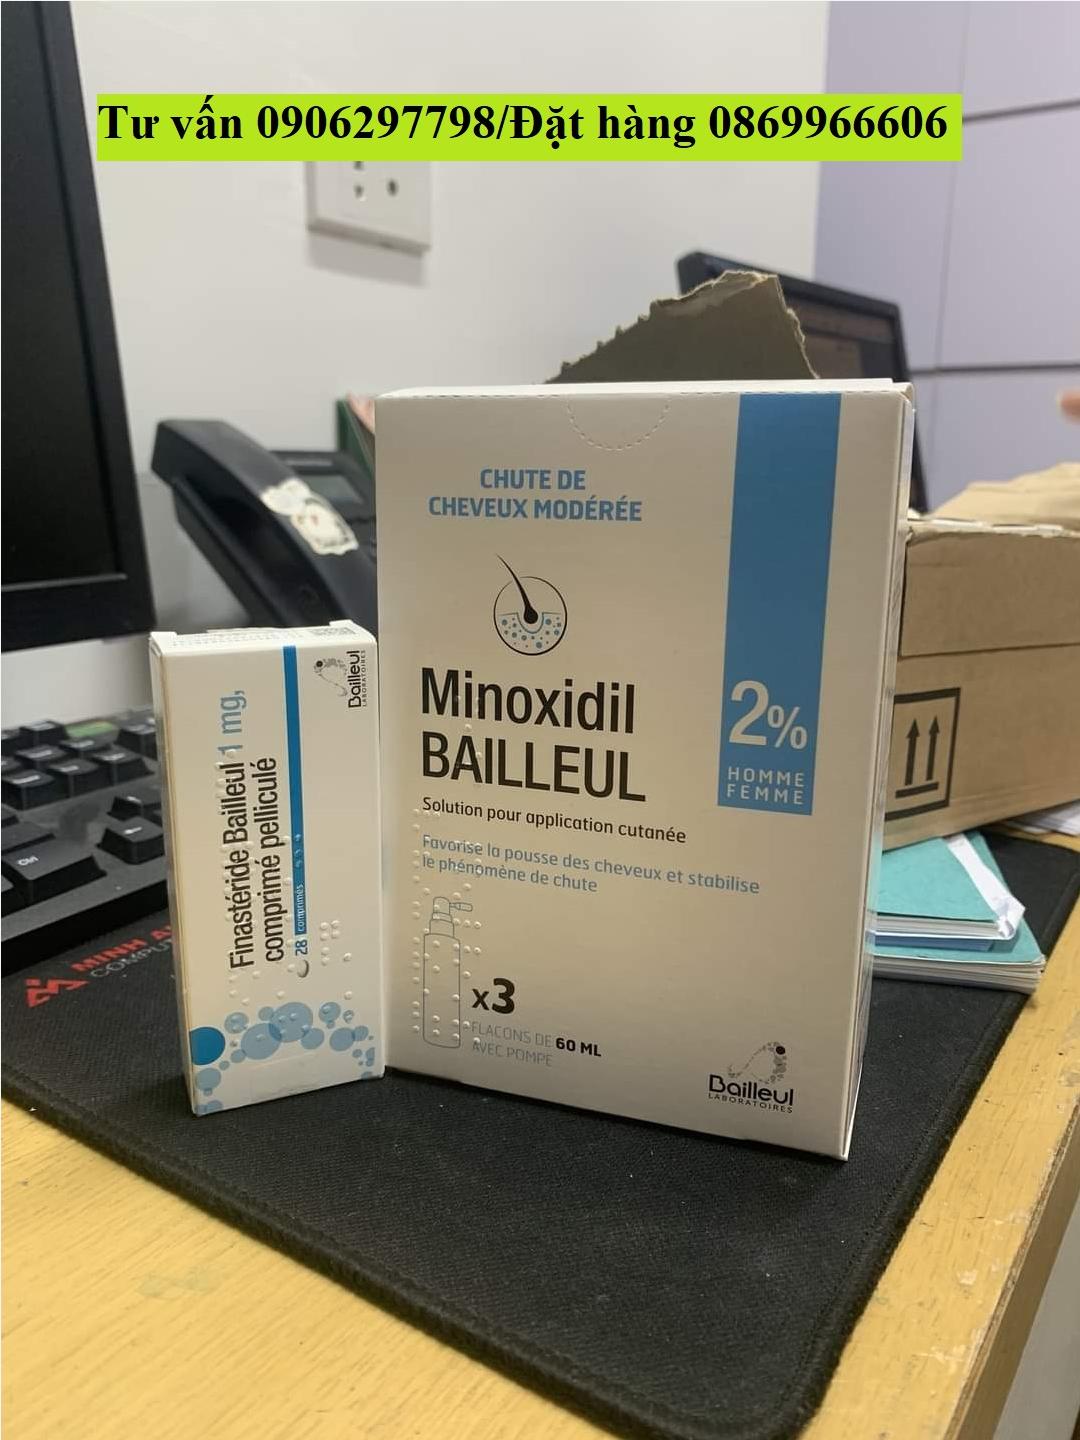 Thuốc Minoxidil Bailleul giá bao nhiêu mua ở đâu?